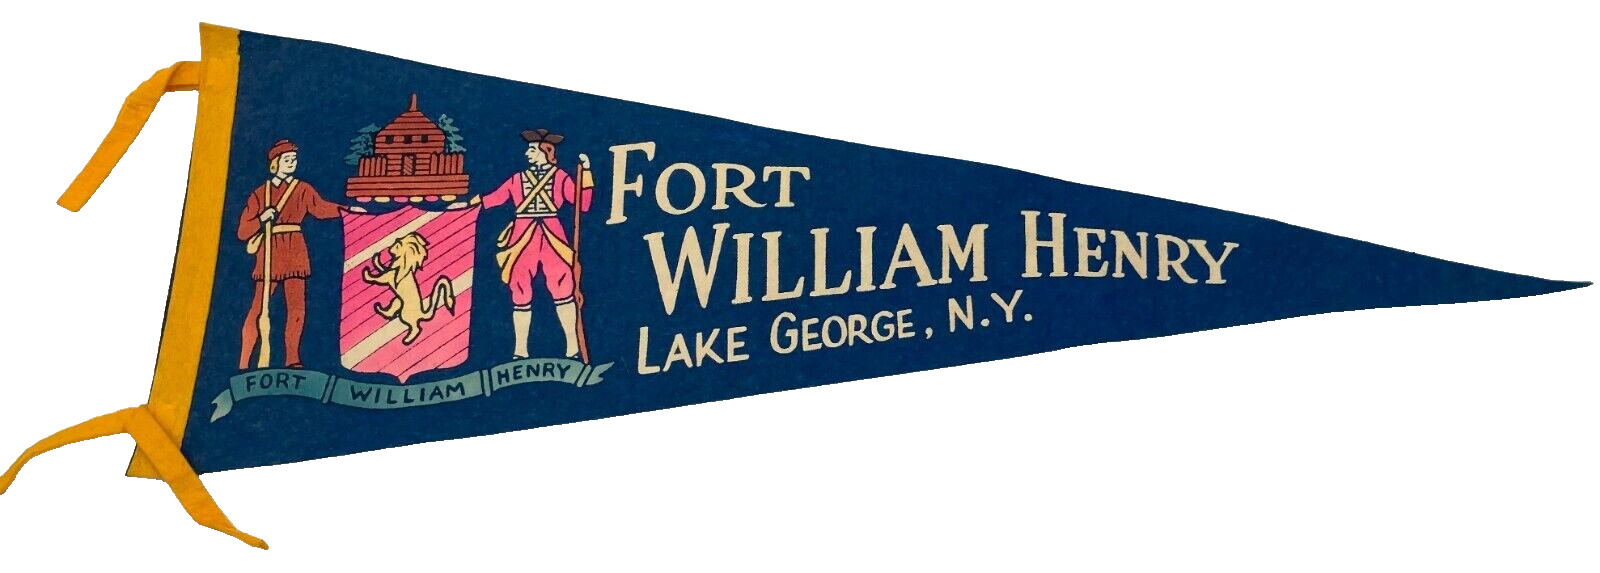 VTG Fort William Henry Lake George, N.Y. Pennant Flag Blue Yellow 26